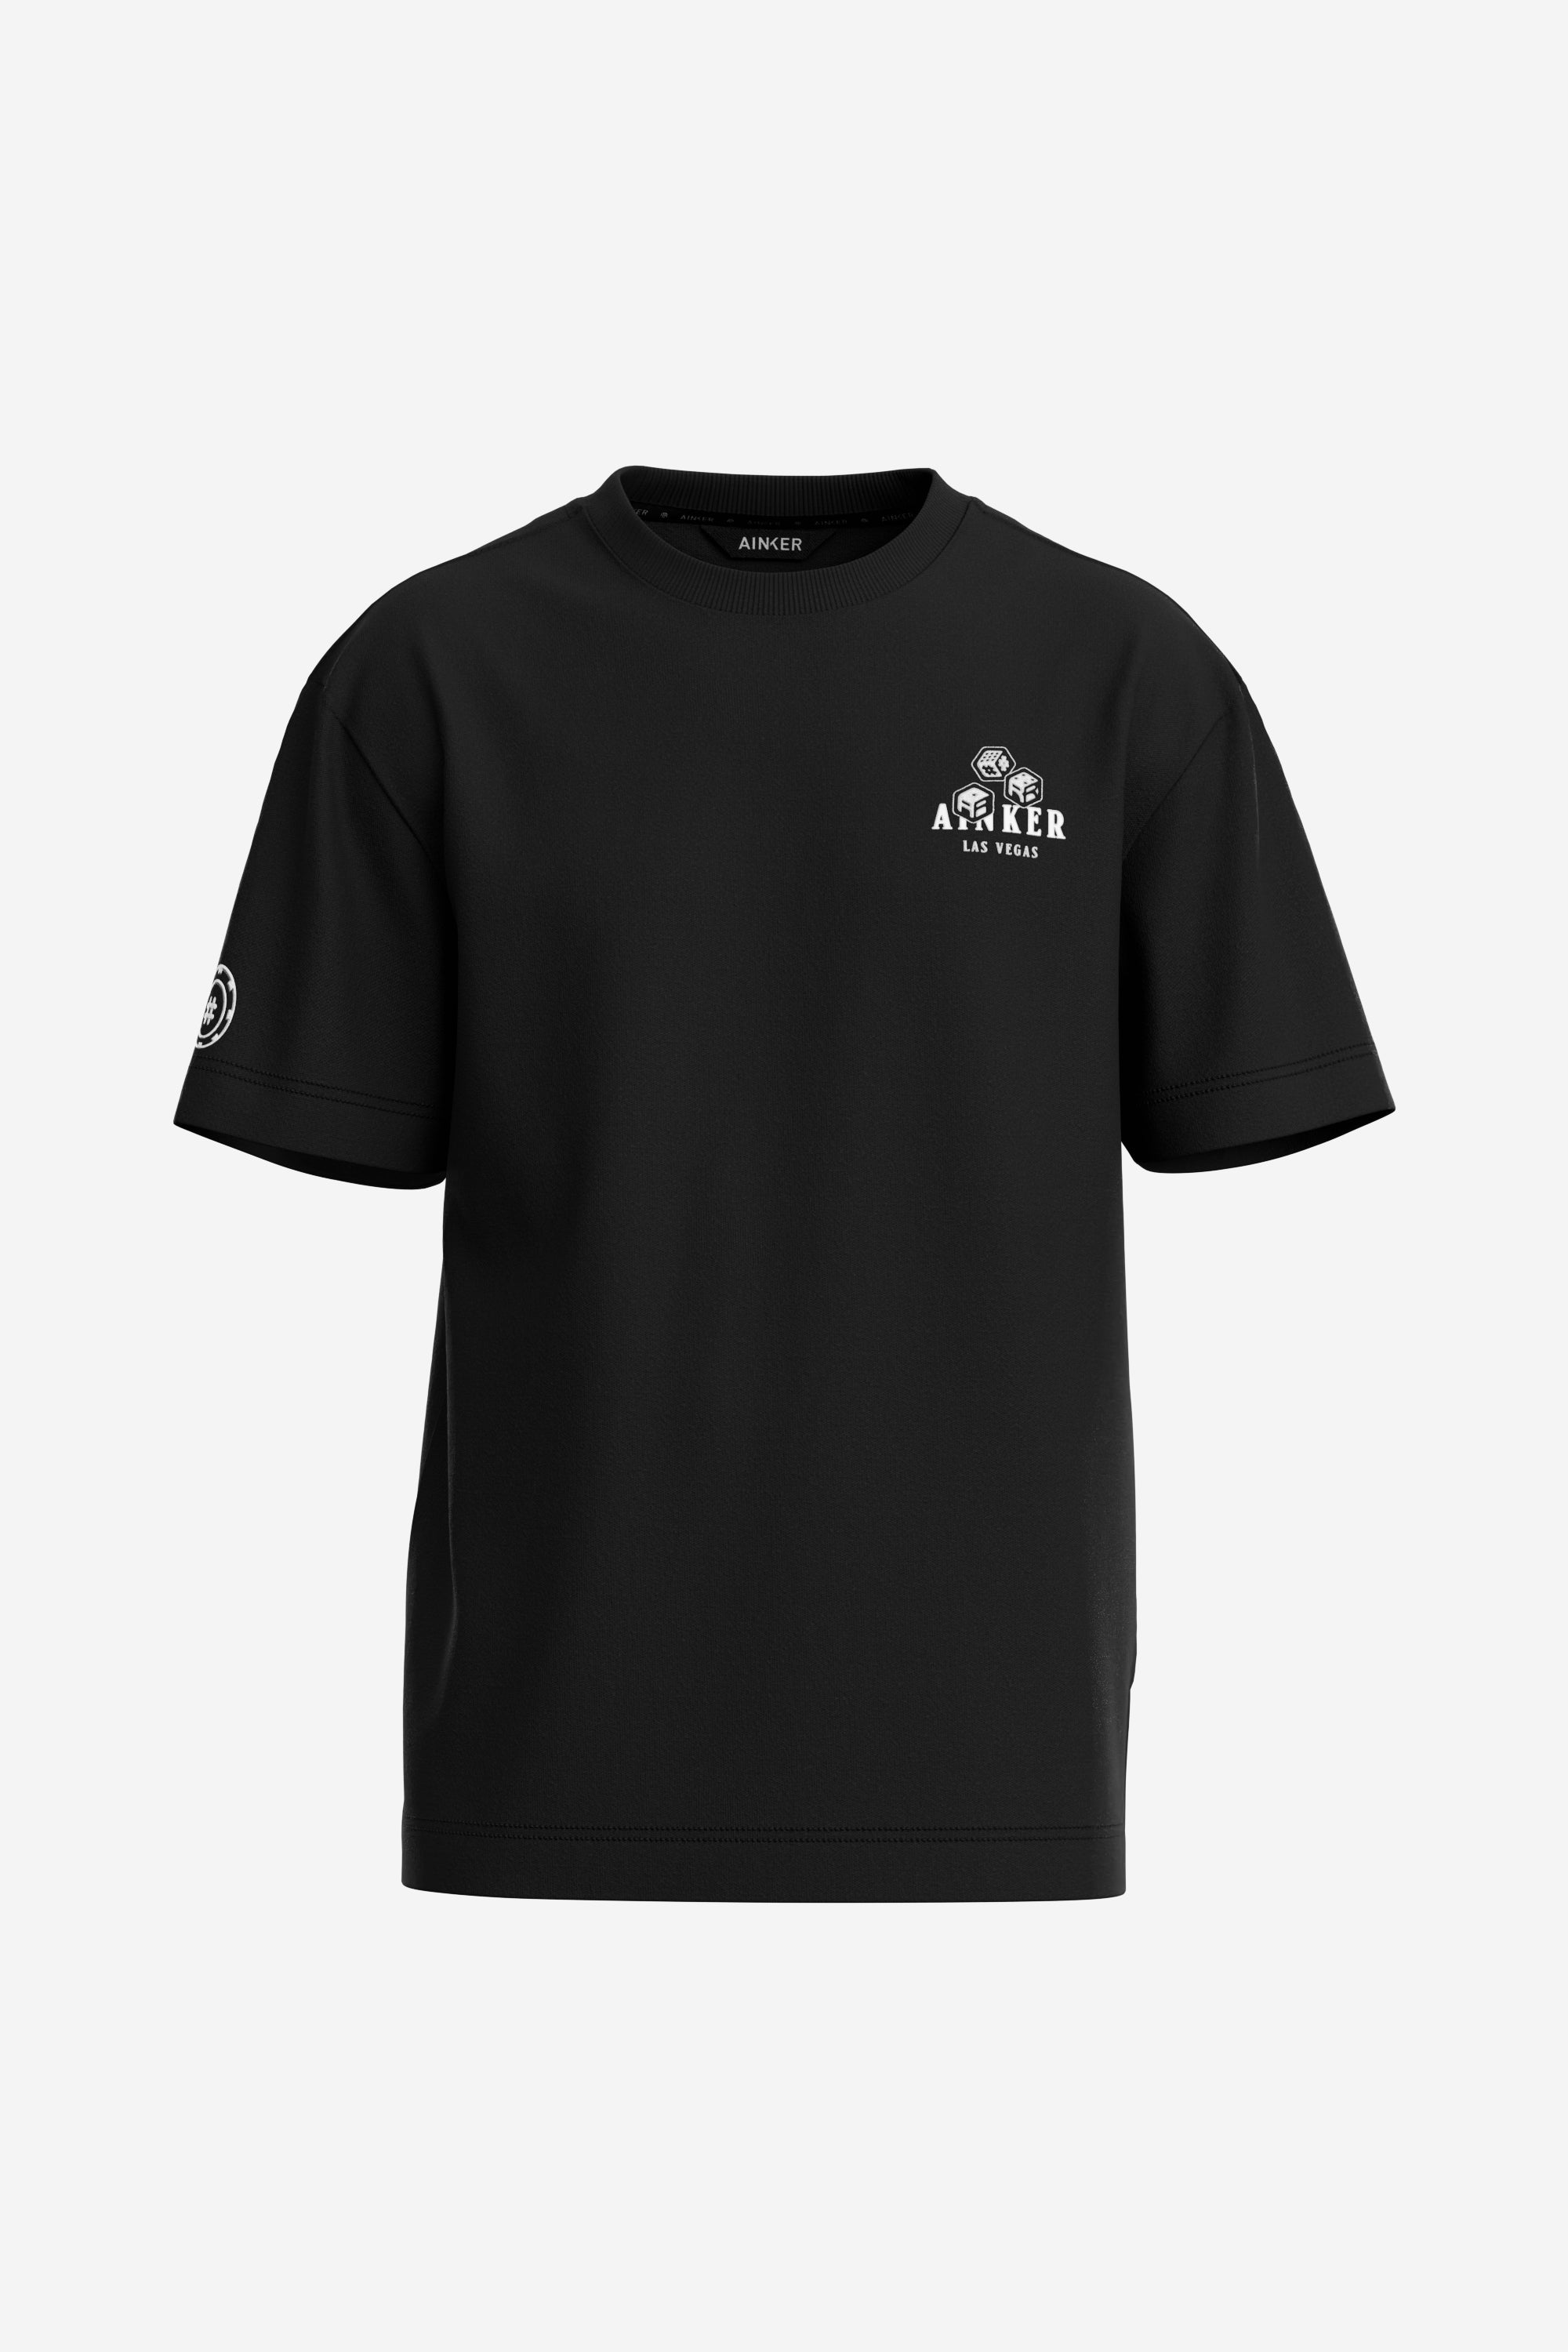 Dice Black T-Shirt